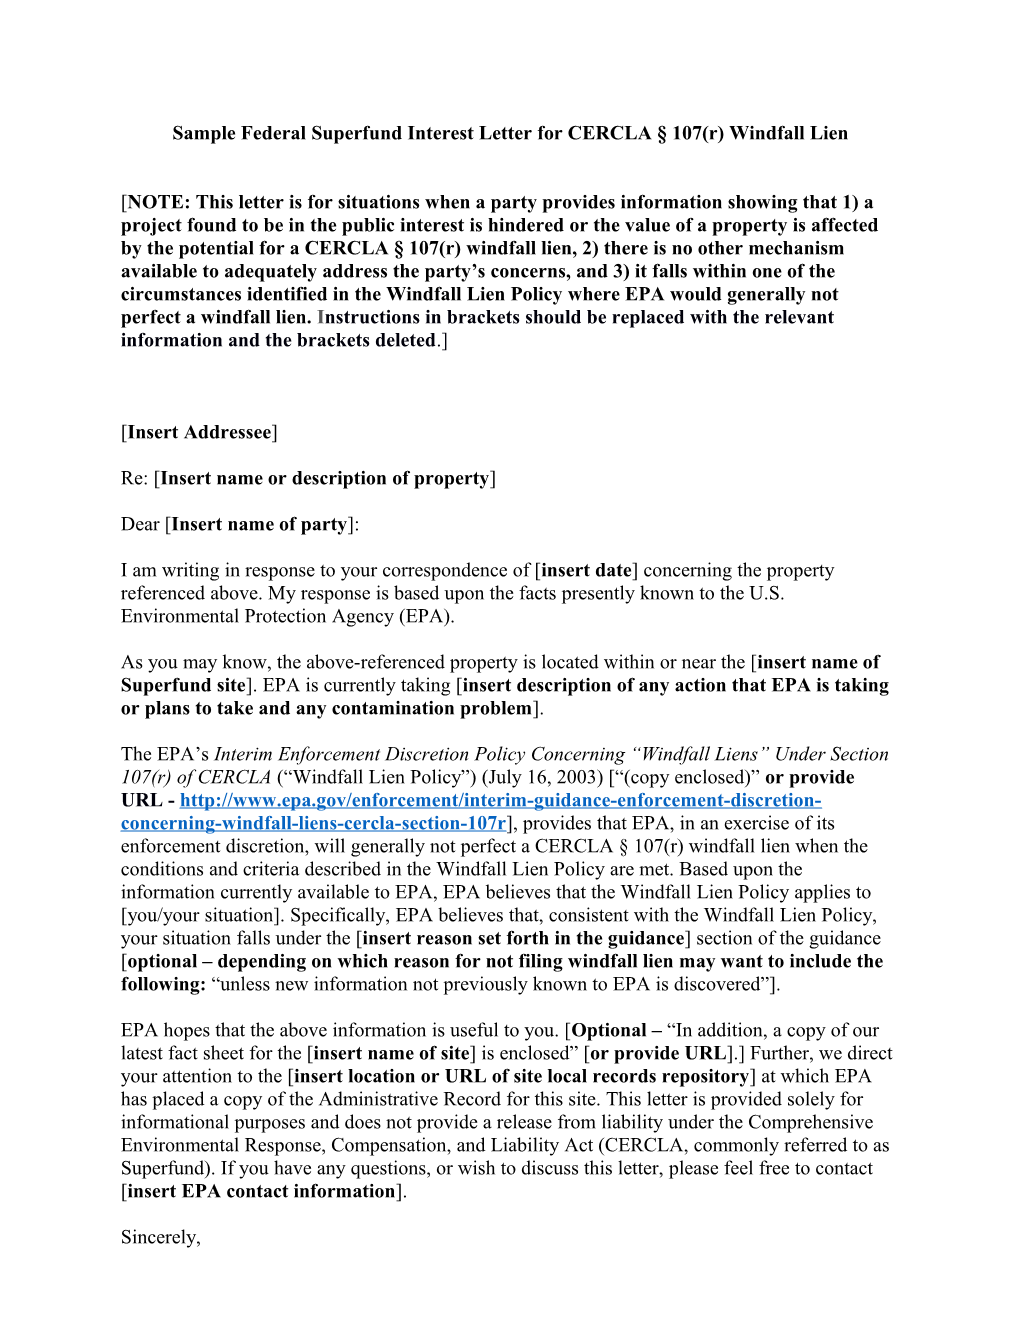 Sample Federal Superfund Interest Letter for CERCLA 107(R) Windfall Lien